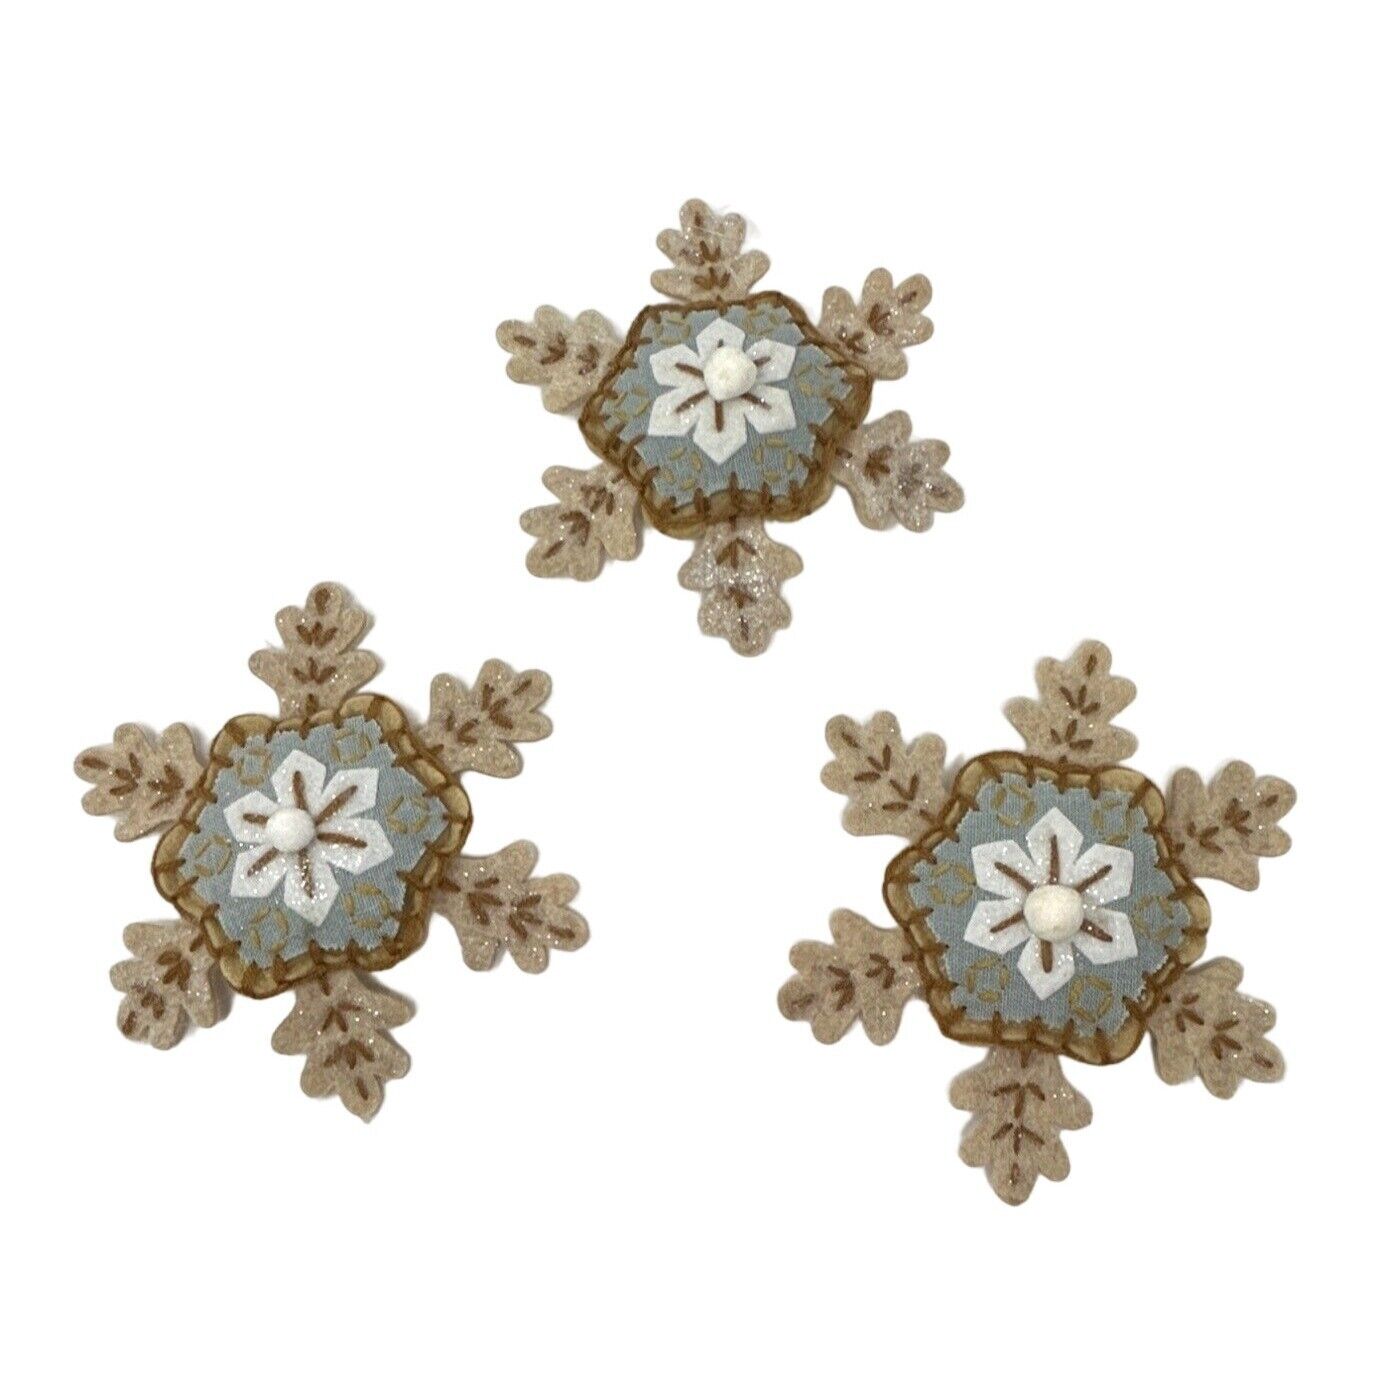 Large Felt Snowflake Ornaments - Set of 3